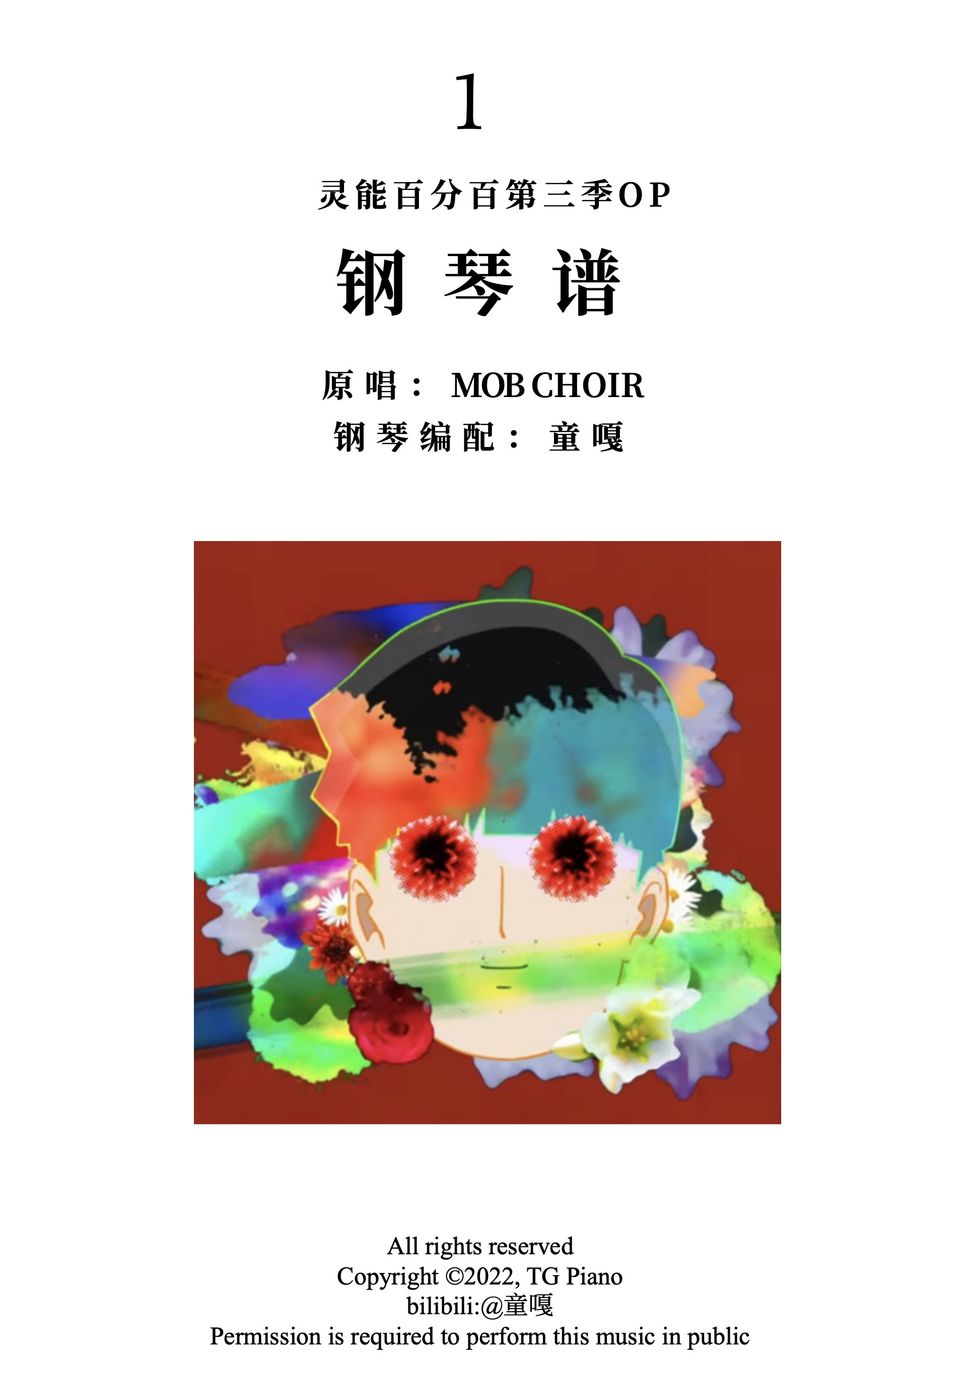 Mob Psycho 100 Season 3 - Opening Full『1』by MOB CHOIR 